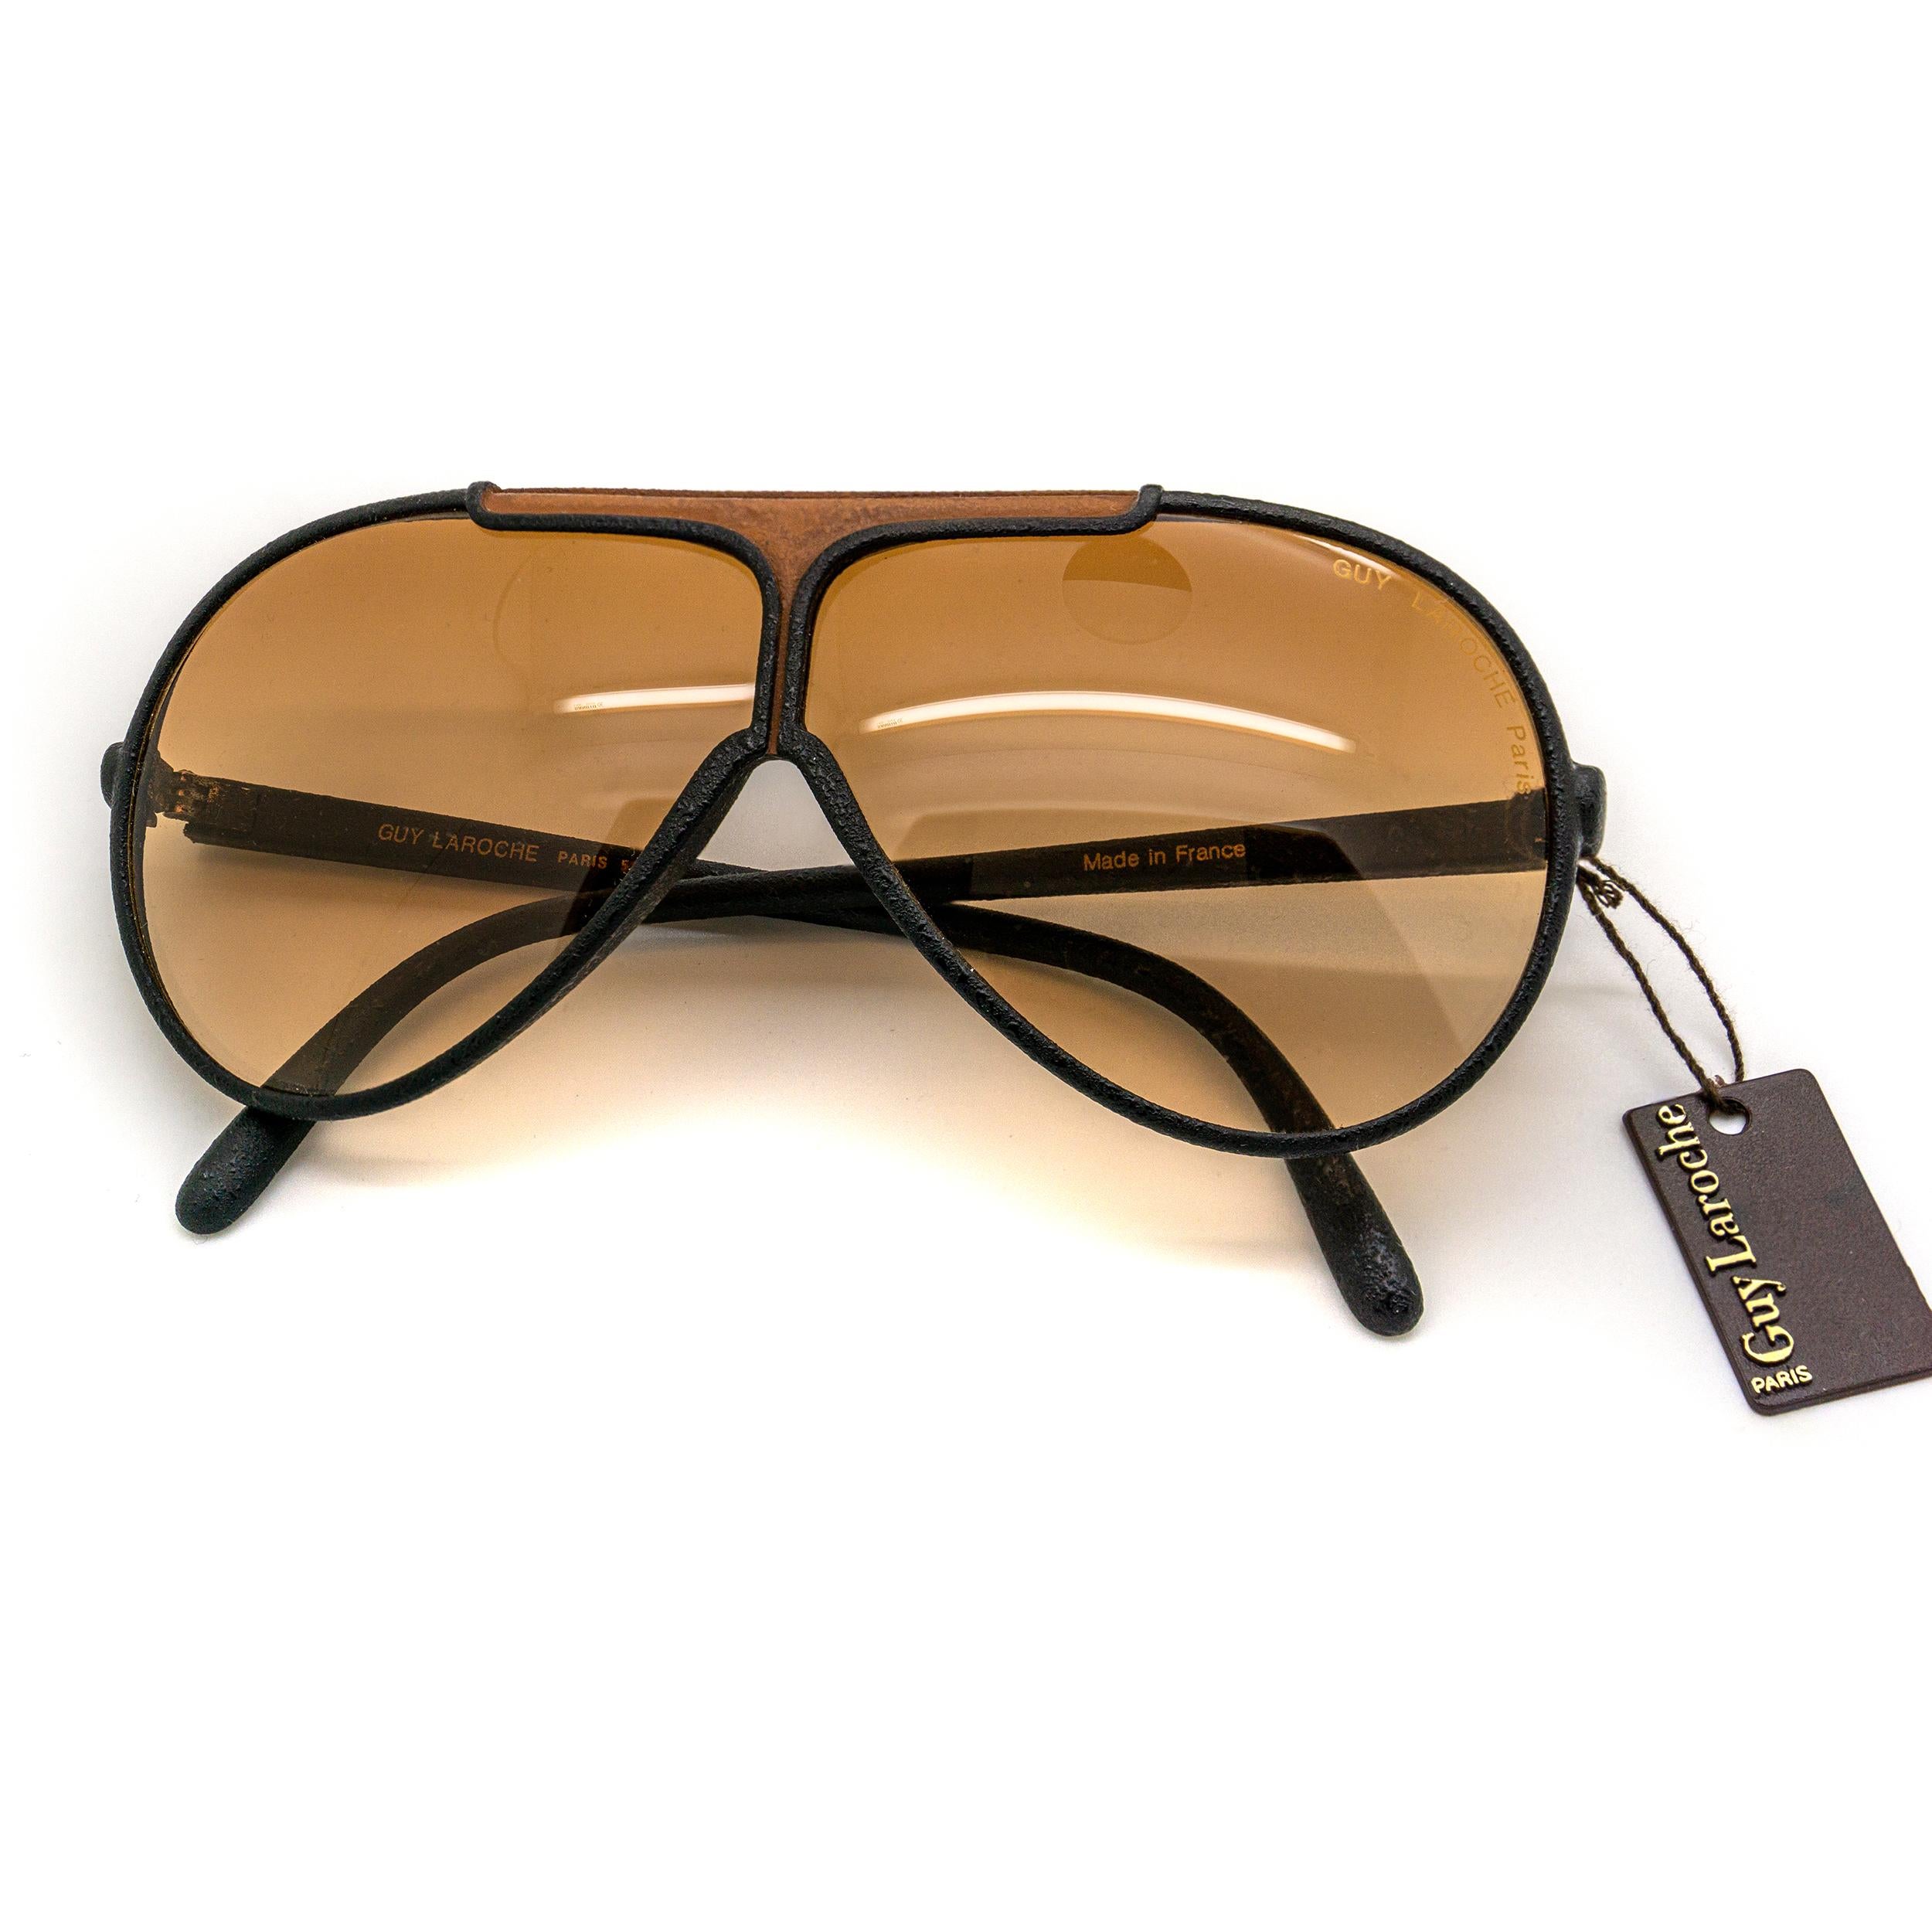 Guy Laroche vintage aviator sunglasses, made in France 1